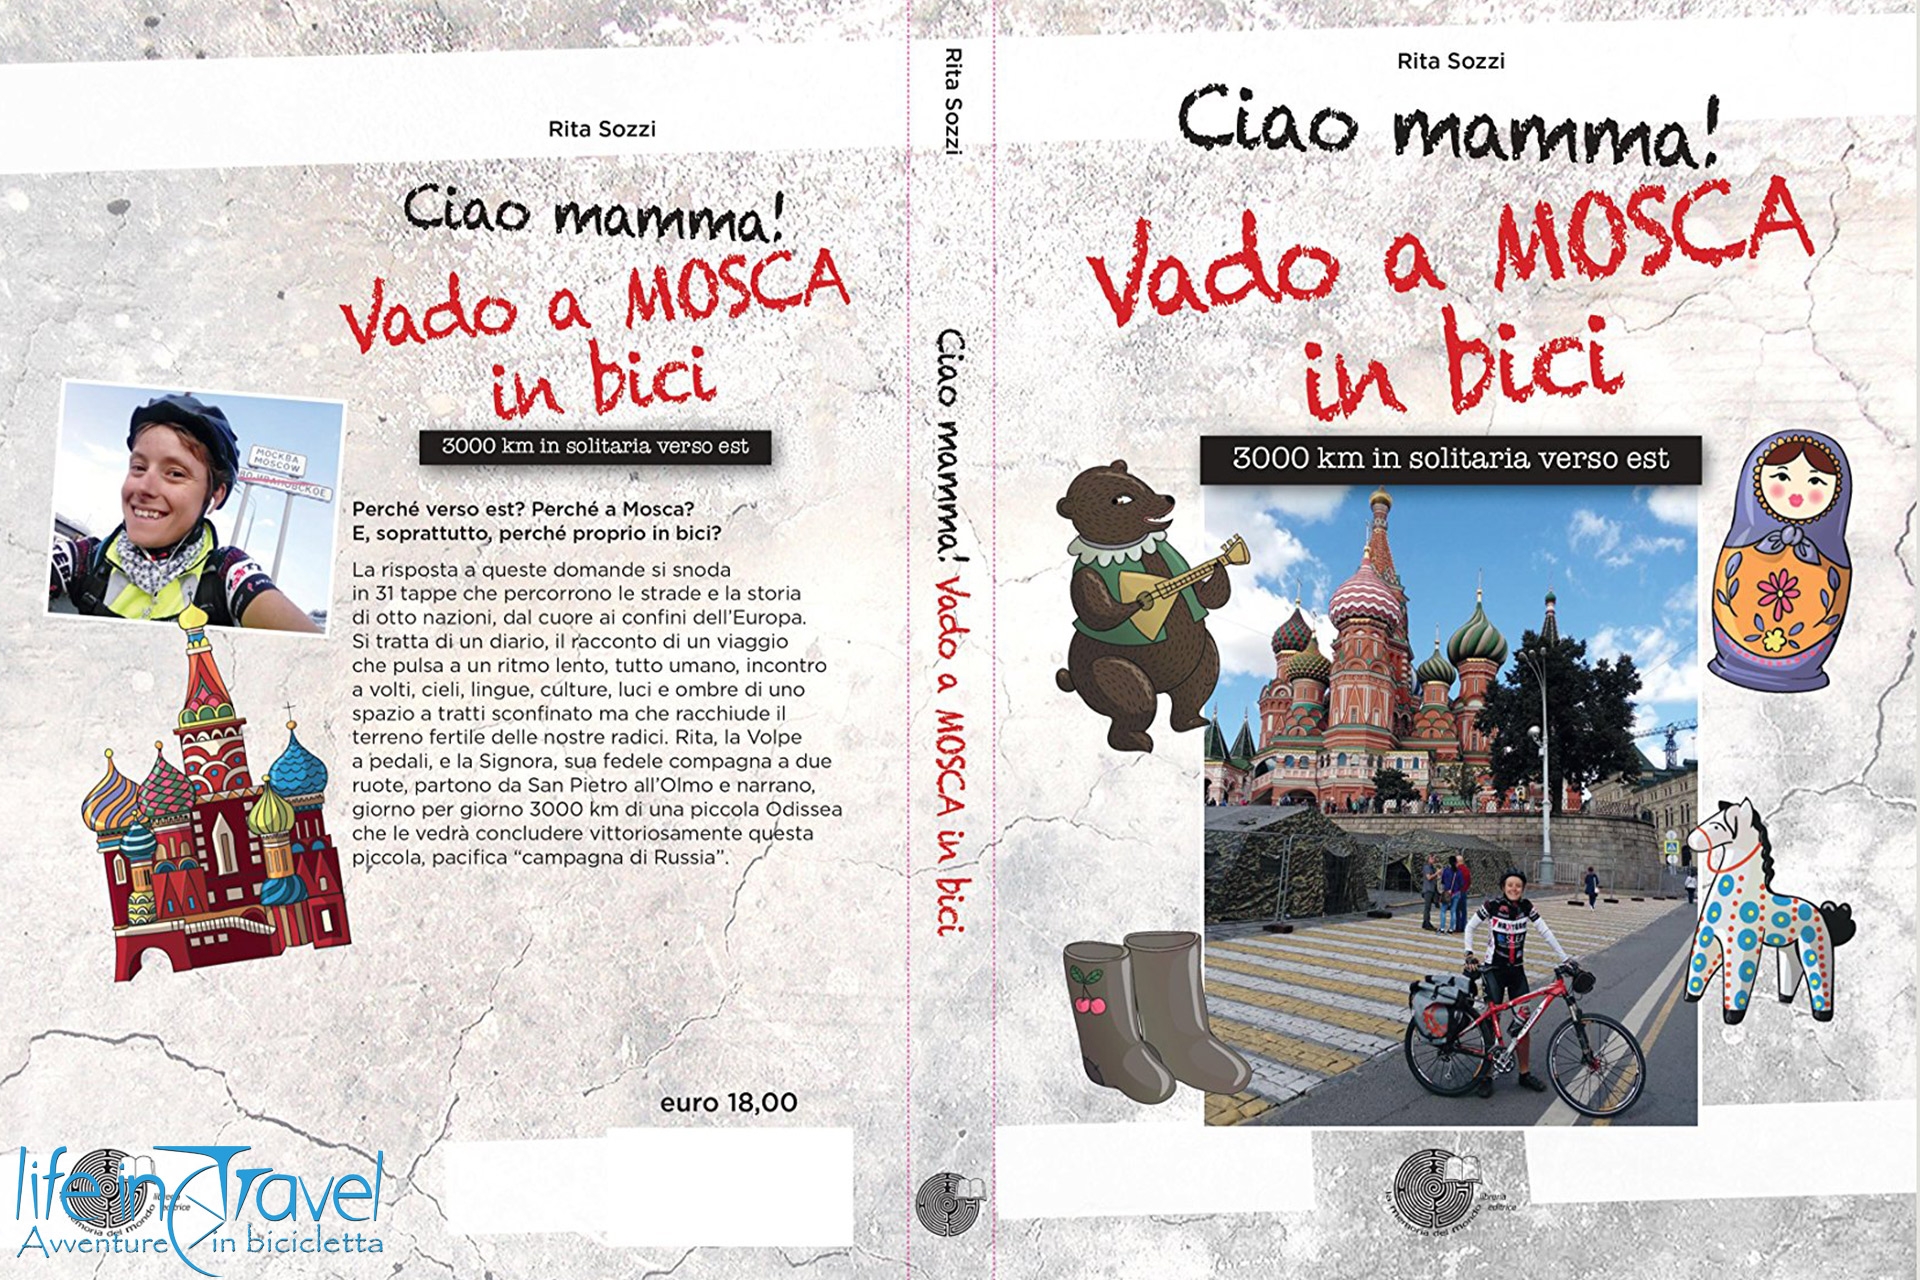 Ciao Mamma! Vado a Mosca in bici